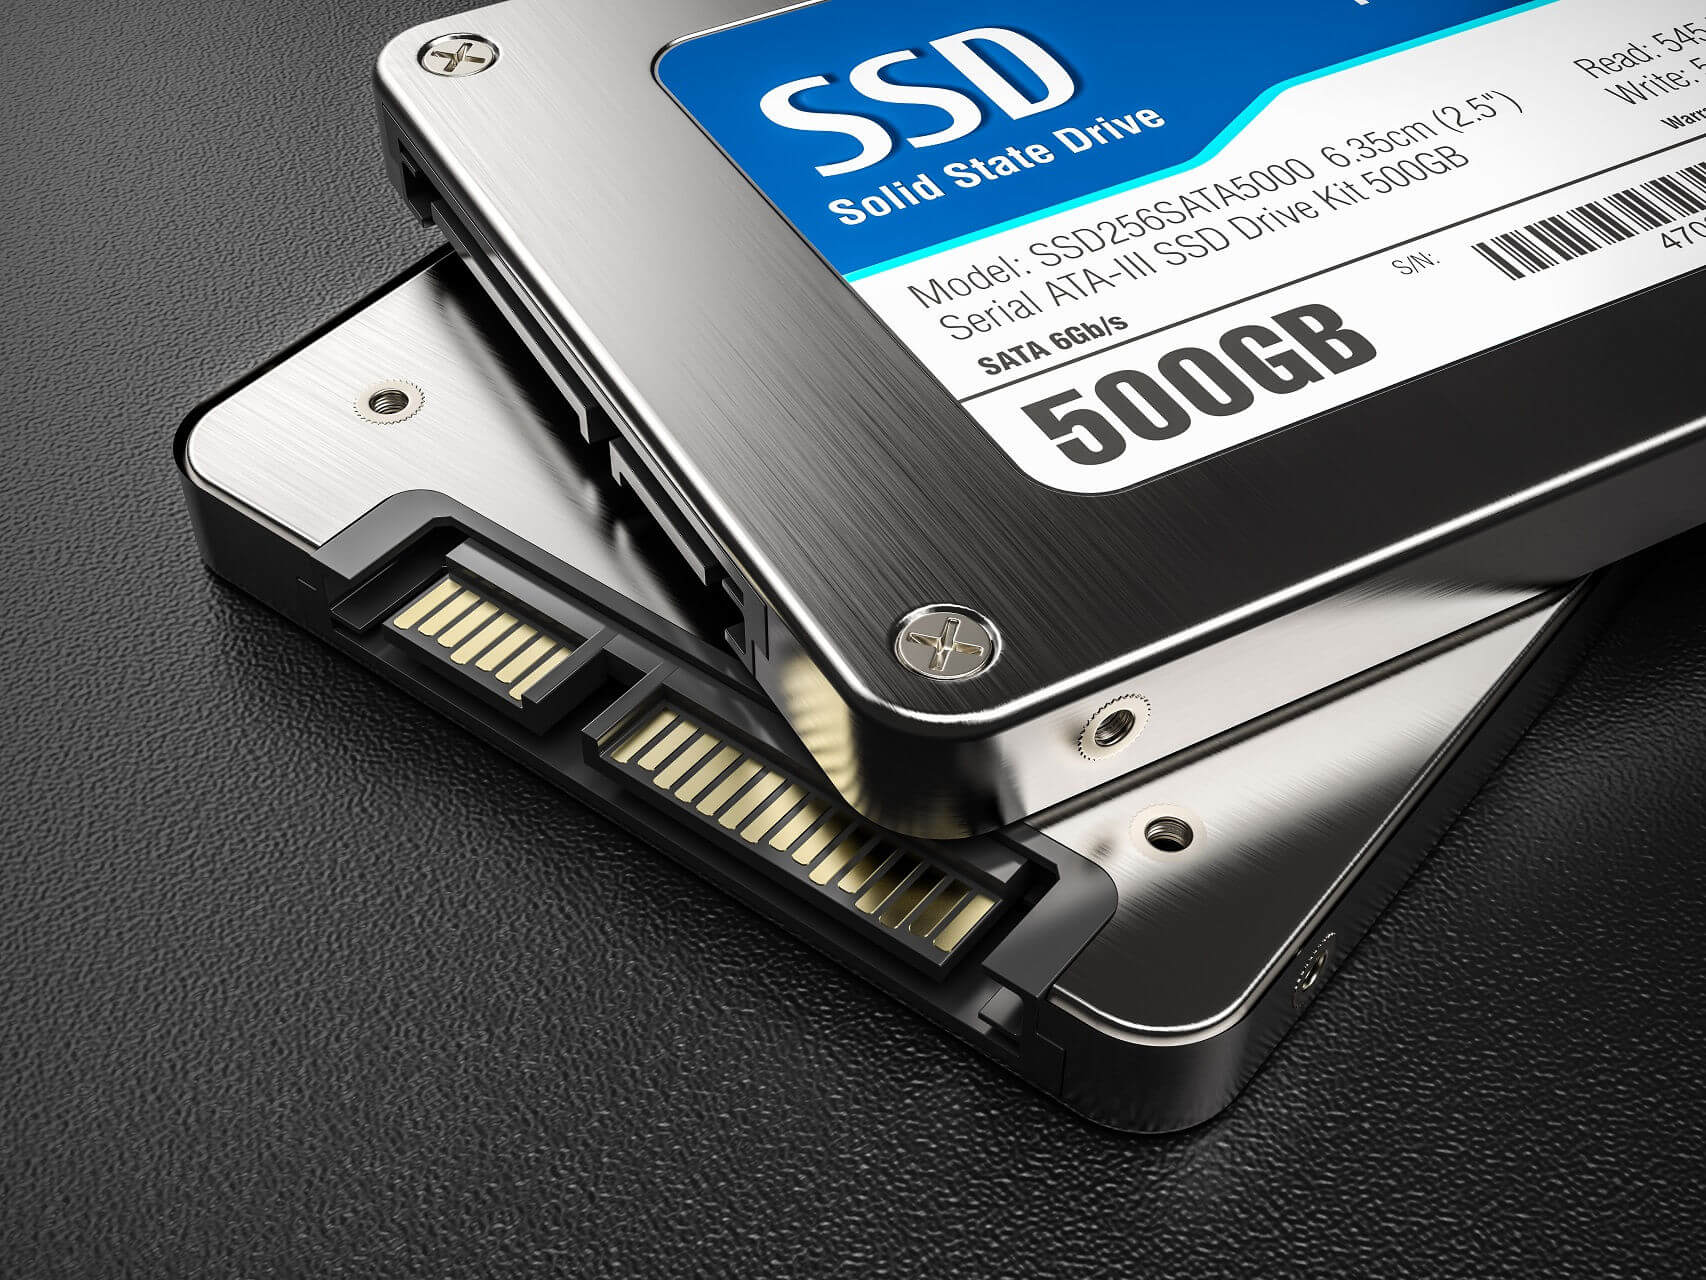 Most erdemed SSD re valtani durva aremelkedes jon